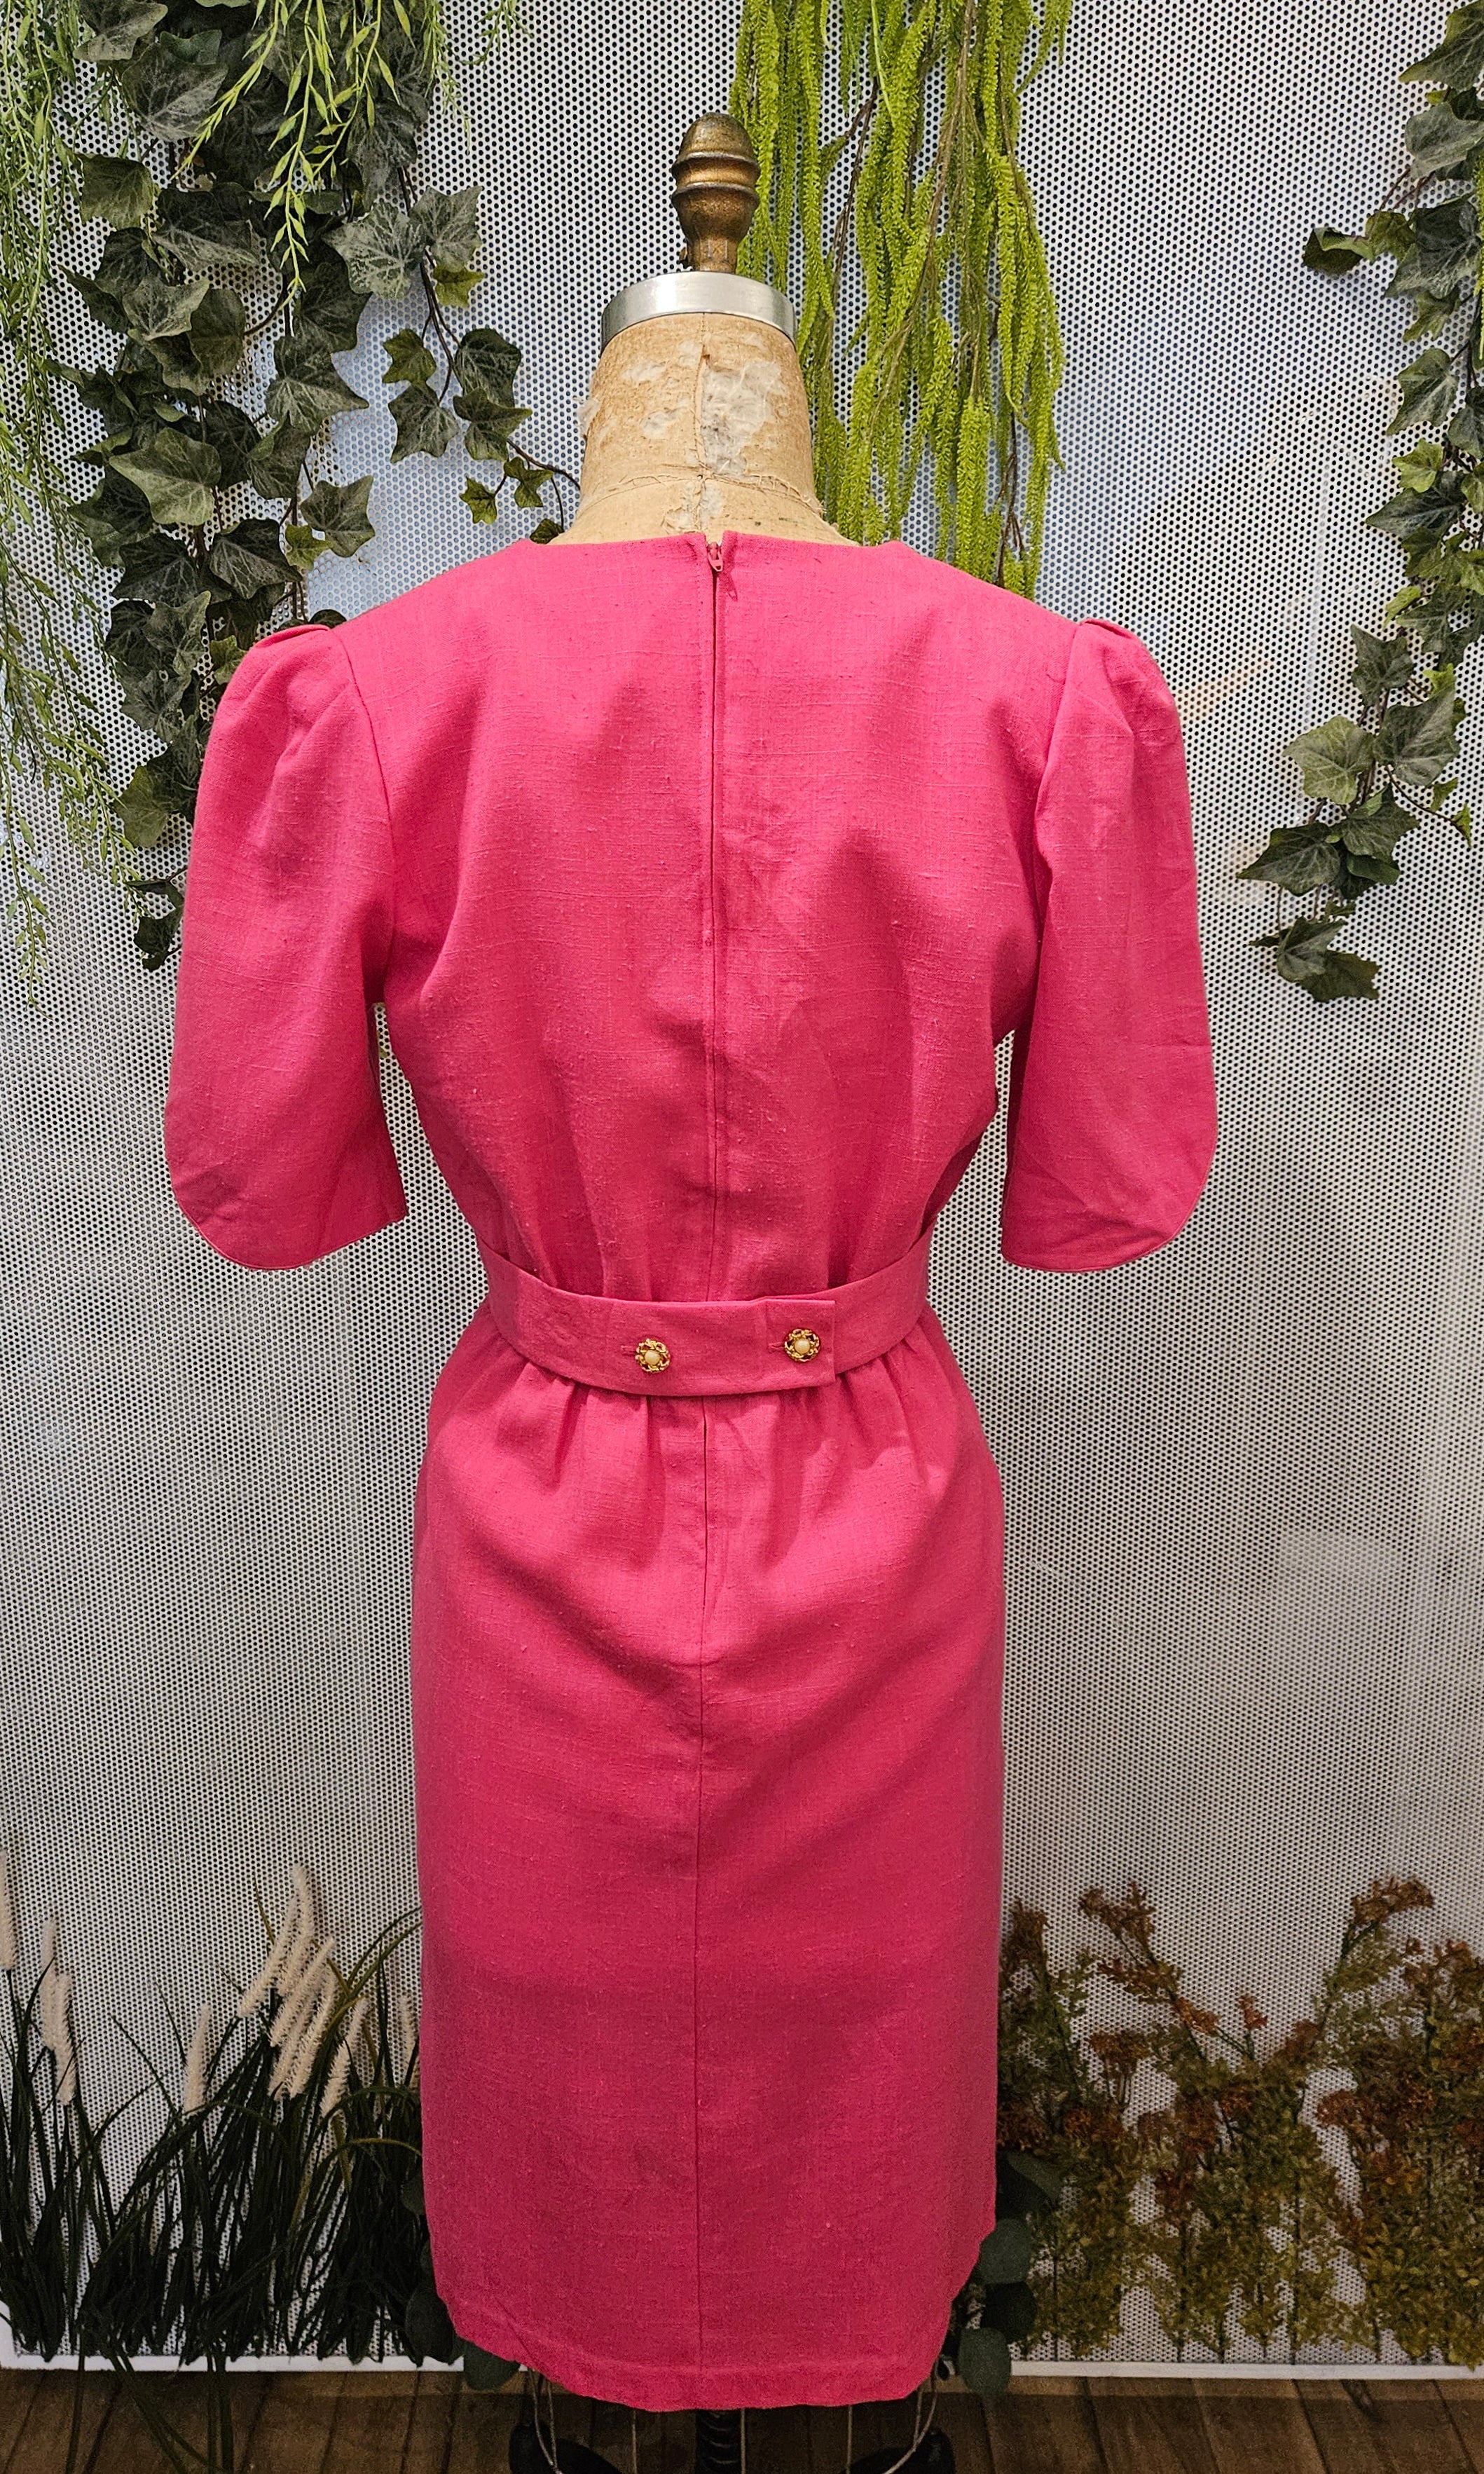 1980’s Bright Pink Dress